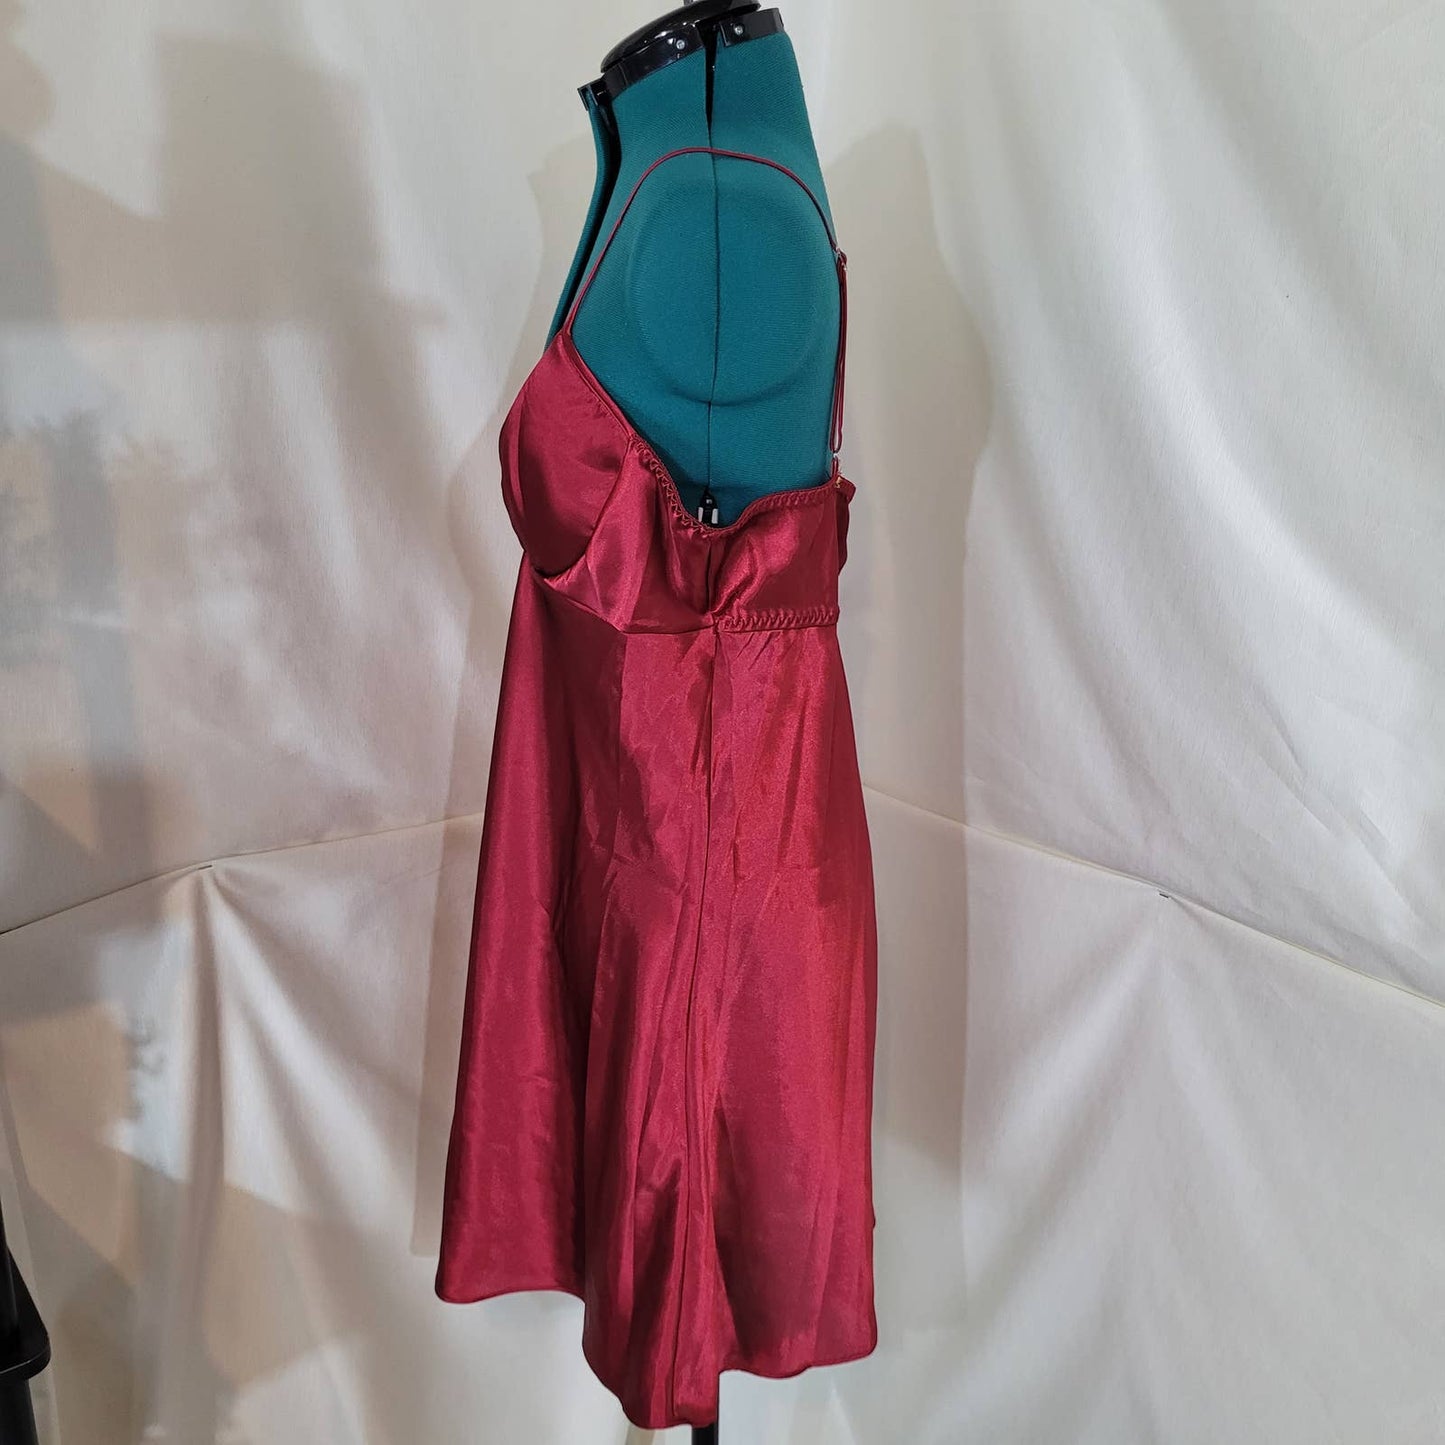 Vintage Seductive Wear by Cinema Etoile Red Satin Slip Pink Rhinestone Brooch XL